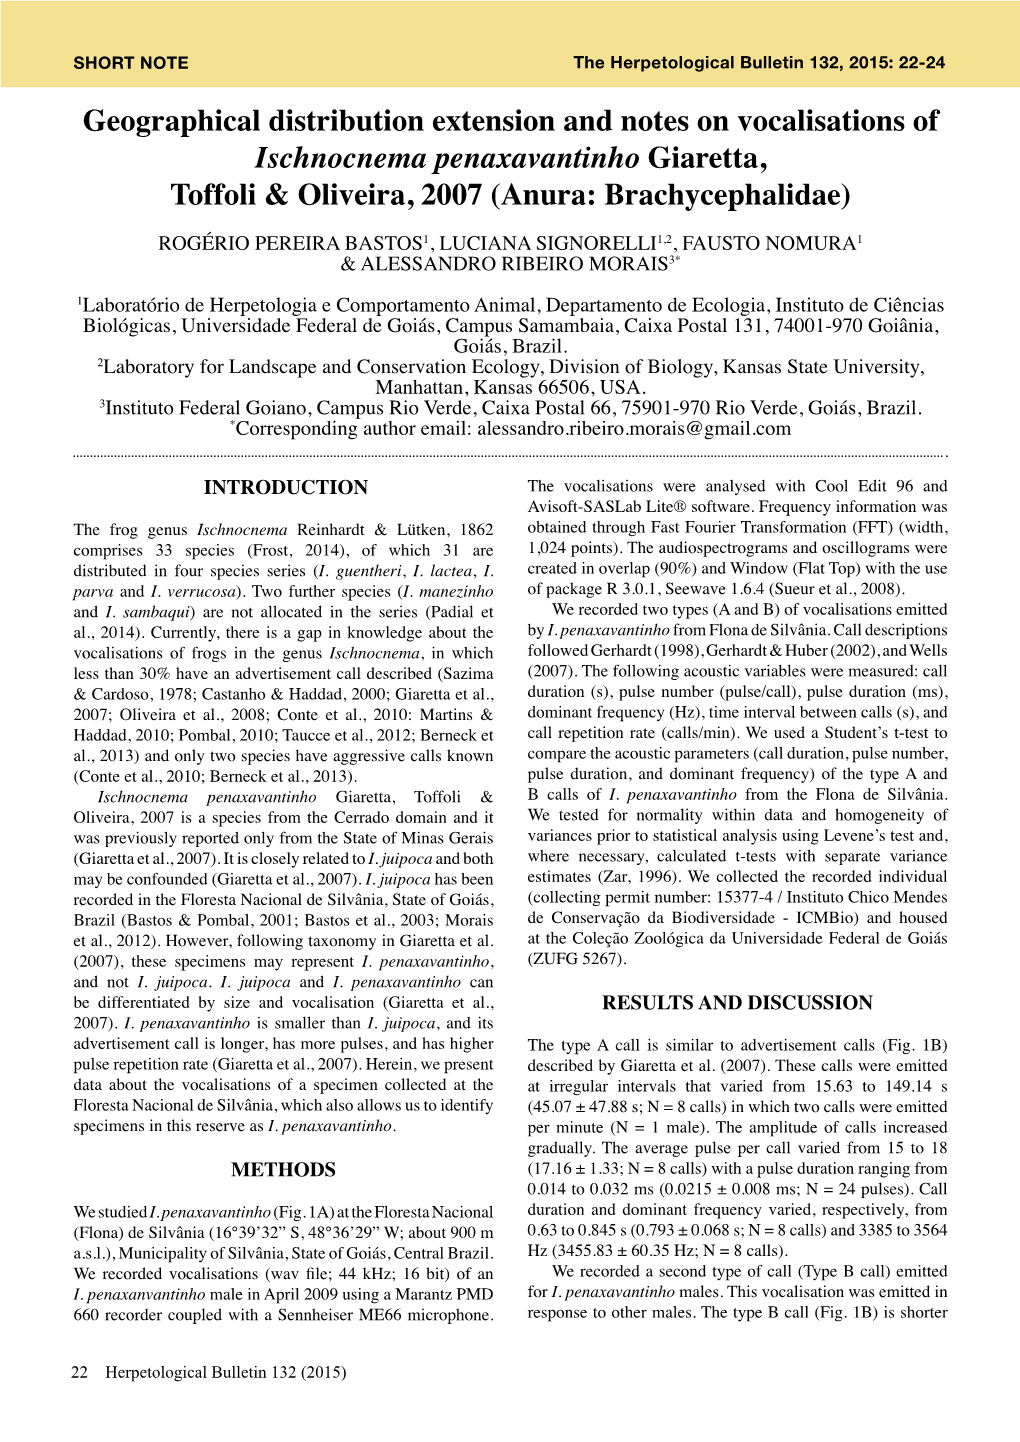 Geographical Distribution Extension and Notes on Vocalisations of Ischnocnema Penaxavantinho Giaretta, Toffoli & Oliveira, 2007 (Anura: Brachycephalidae)